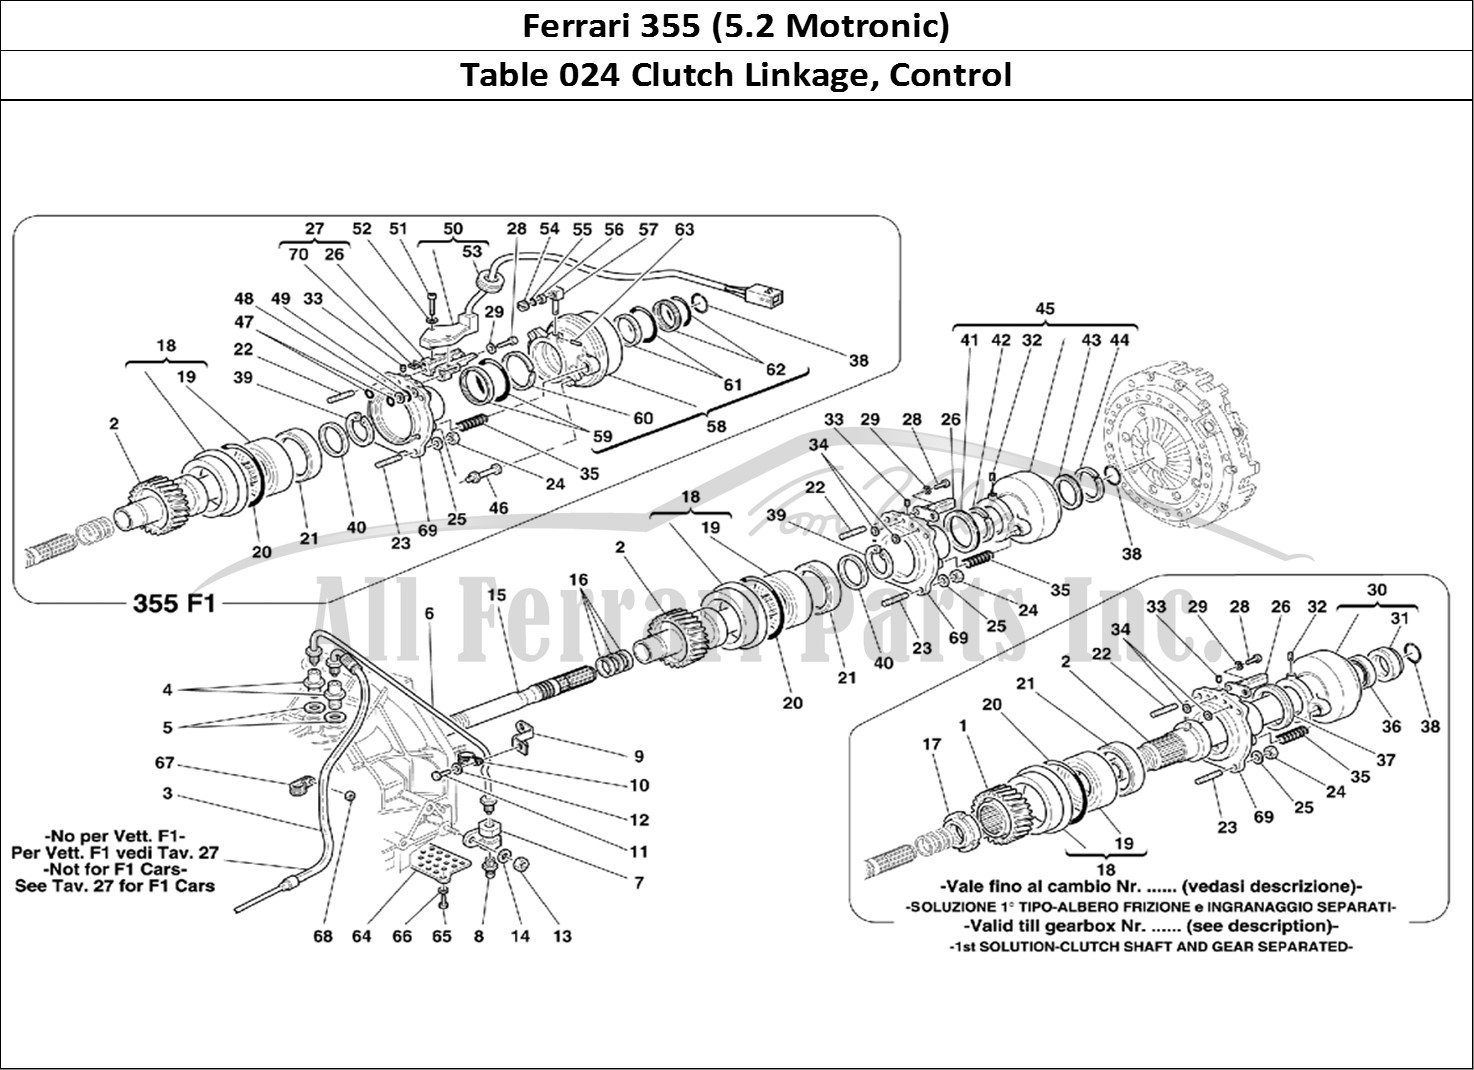 Ferrari Parts Ferrari 355 (5.2 Motronic) Page 024 Clutch Control